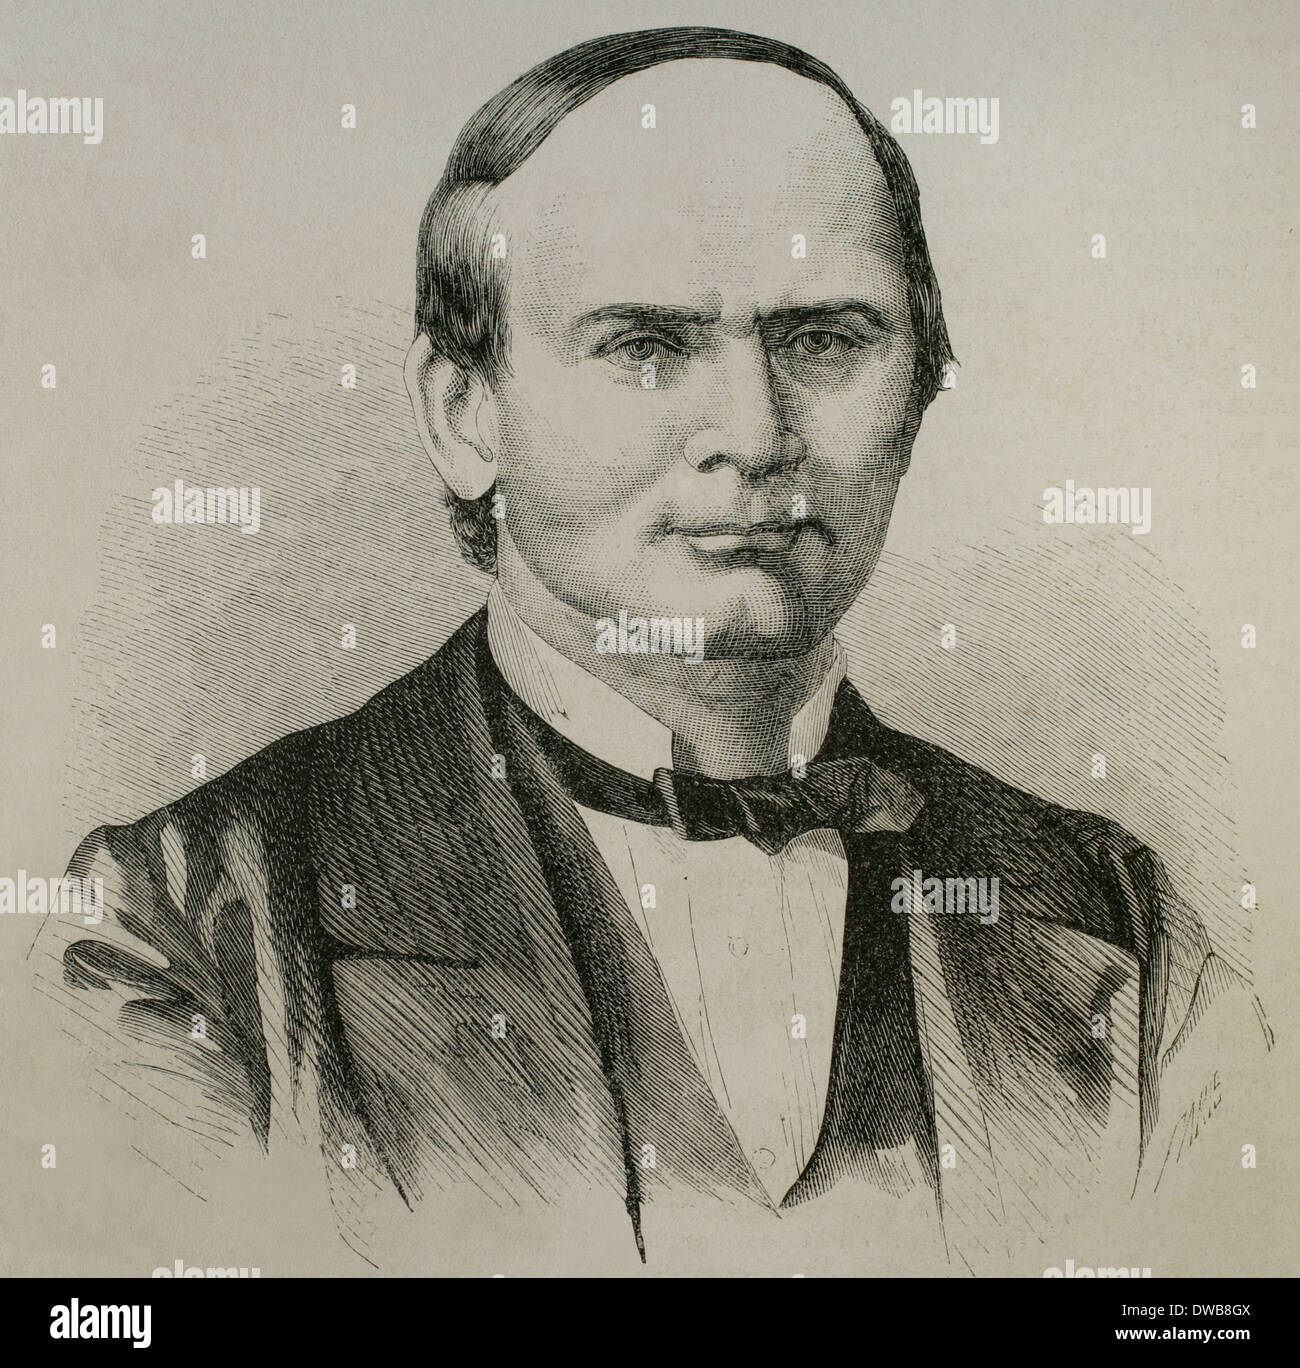 Sebastian Lerdo de Tejada y Corral (1823-1889). Jurist and Liberal president of Mexico. Engraving. Stock Photo